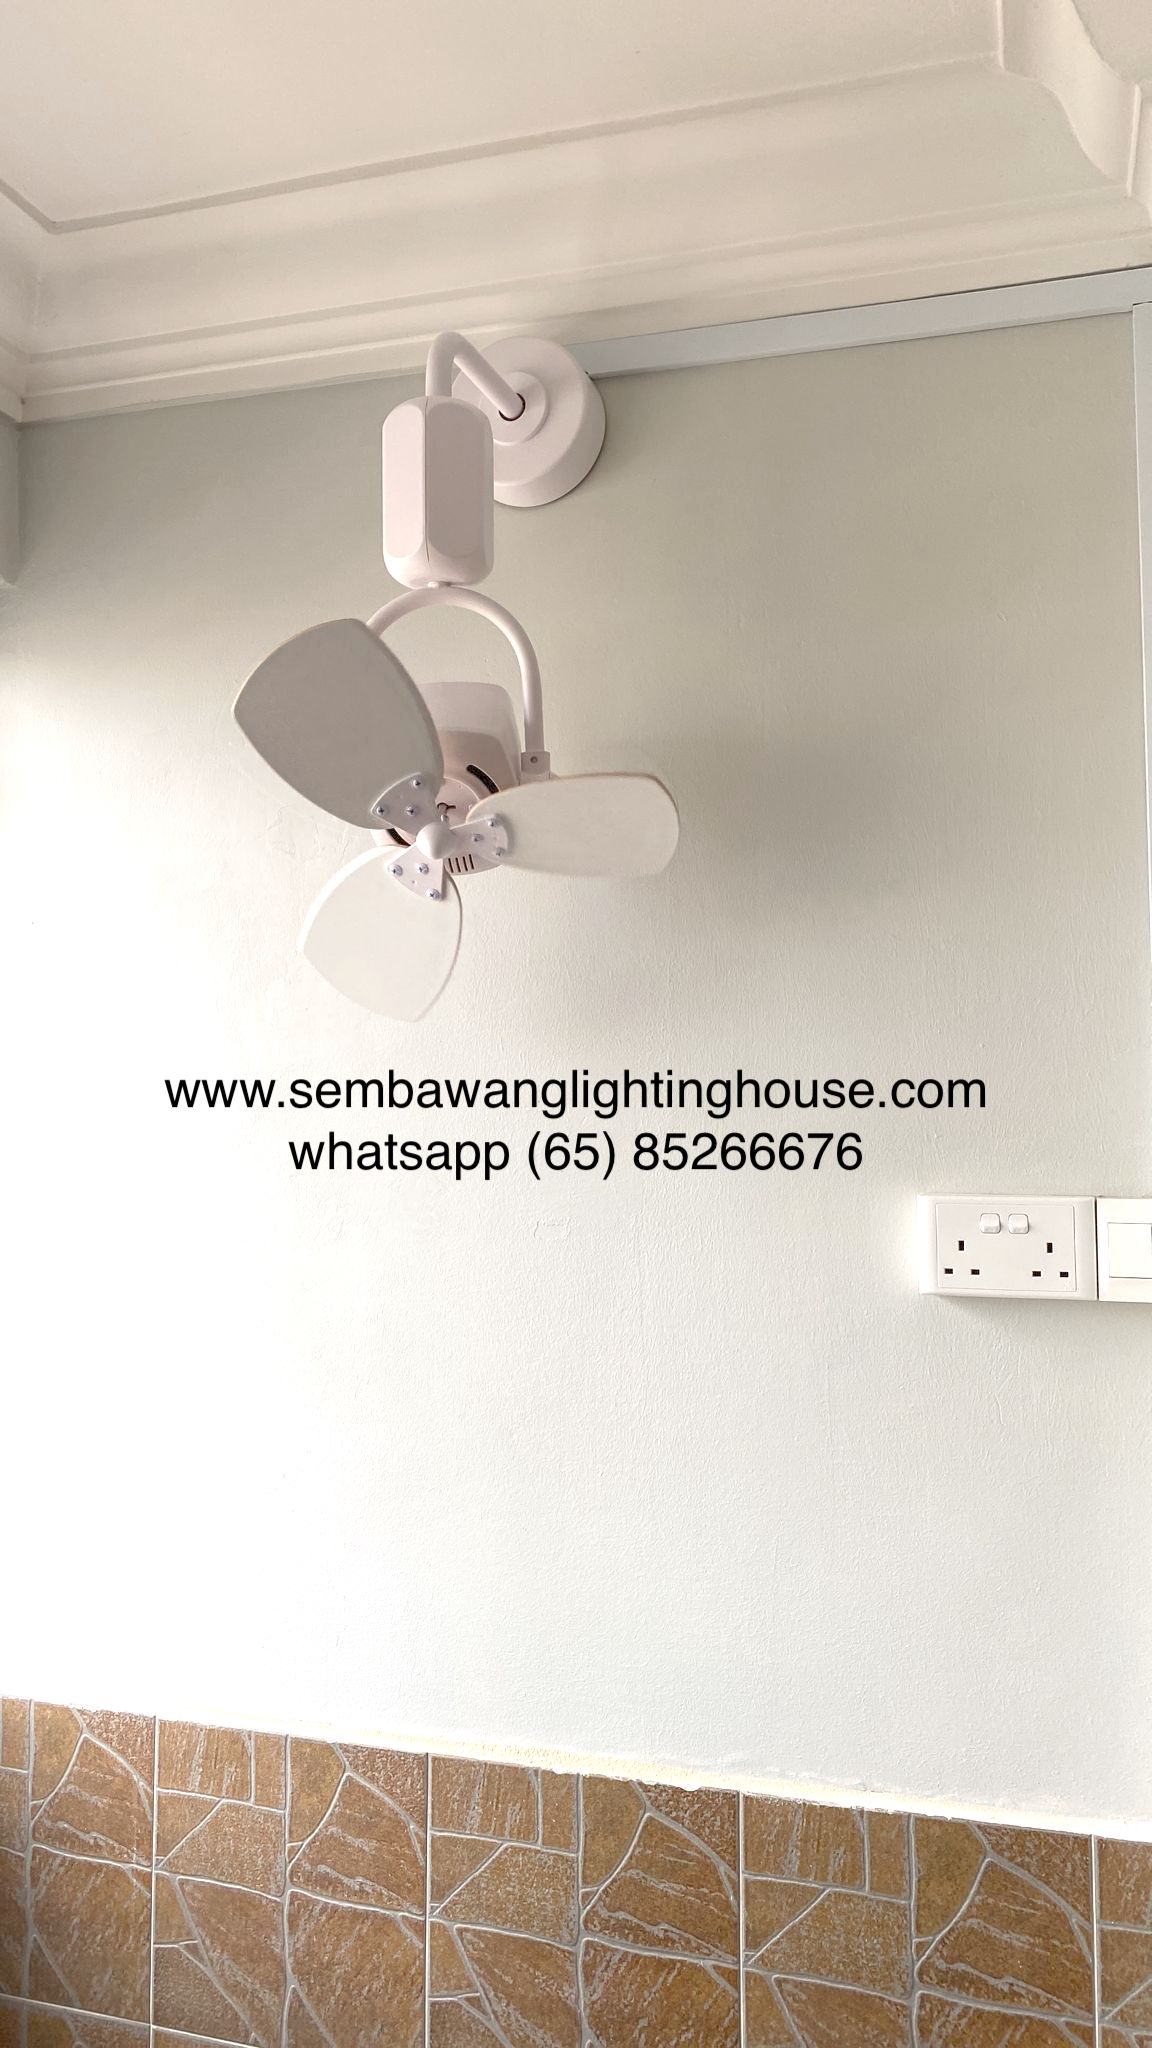 fanco-dono-white-pine-wall-corner-fan-sembawang-lighting-house-01.jpg